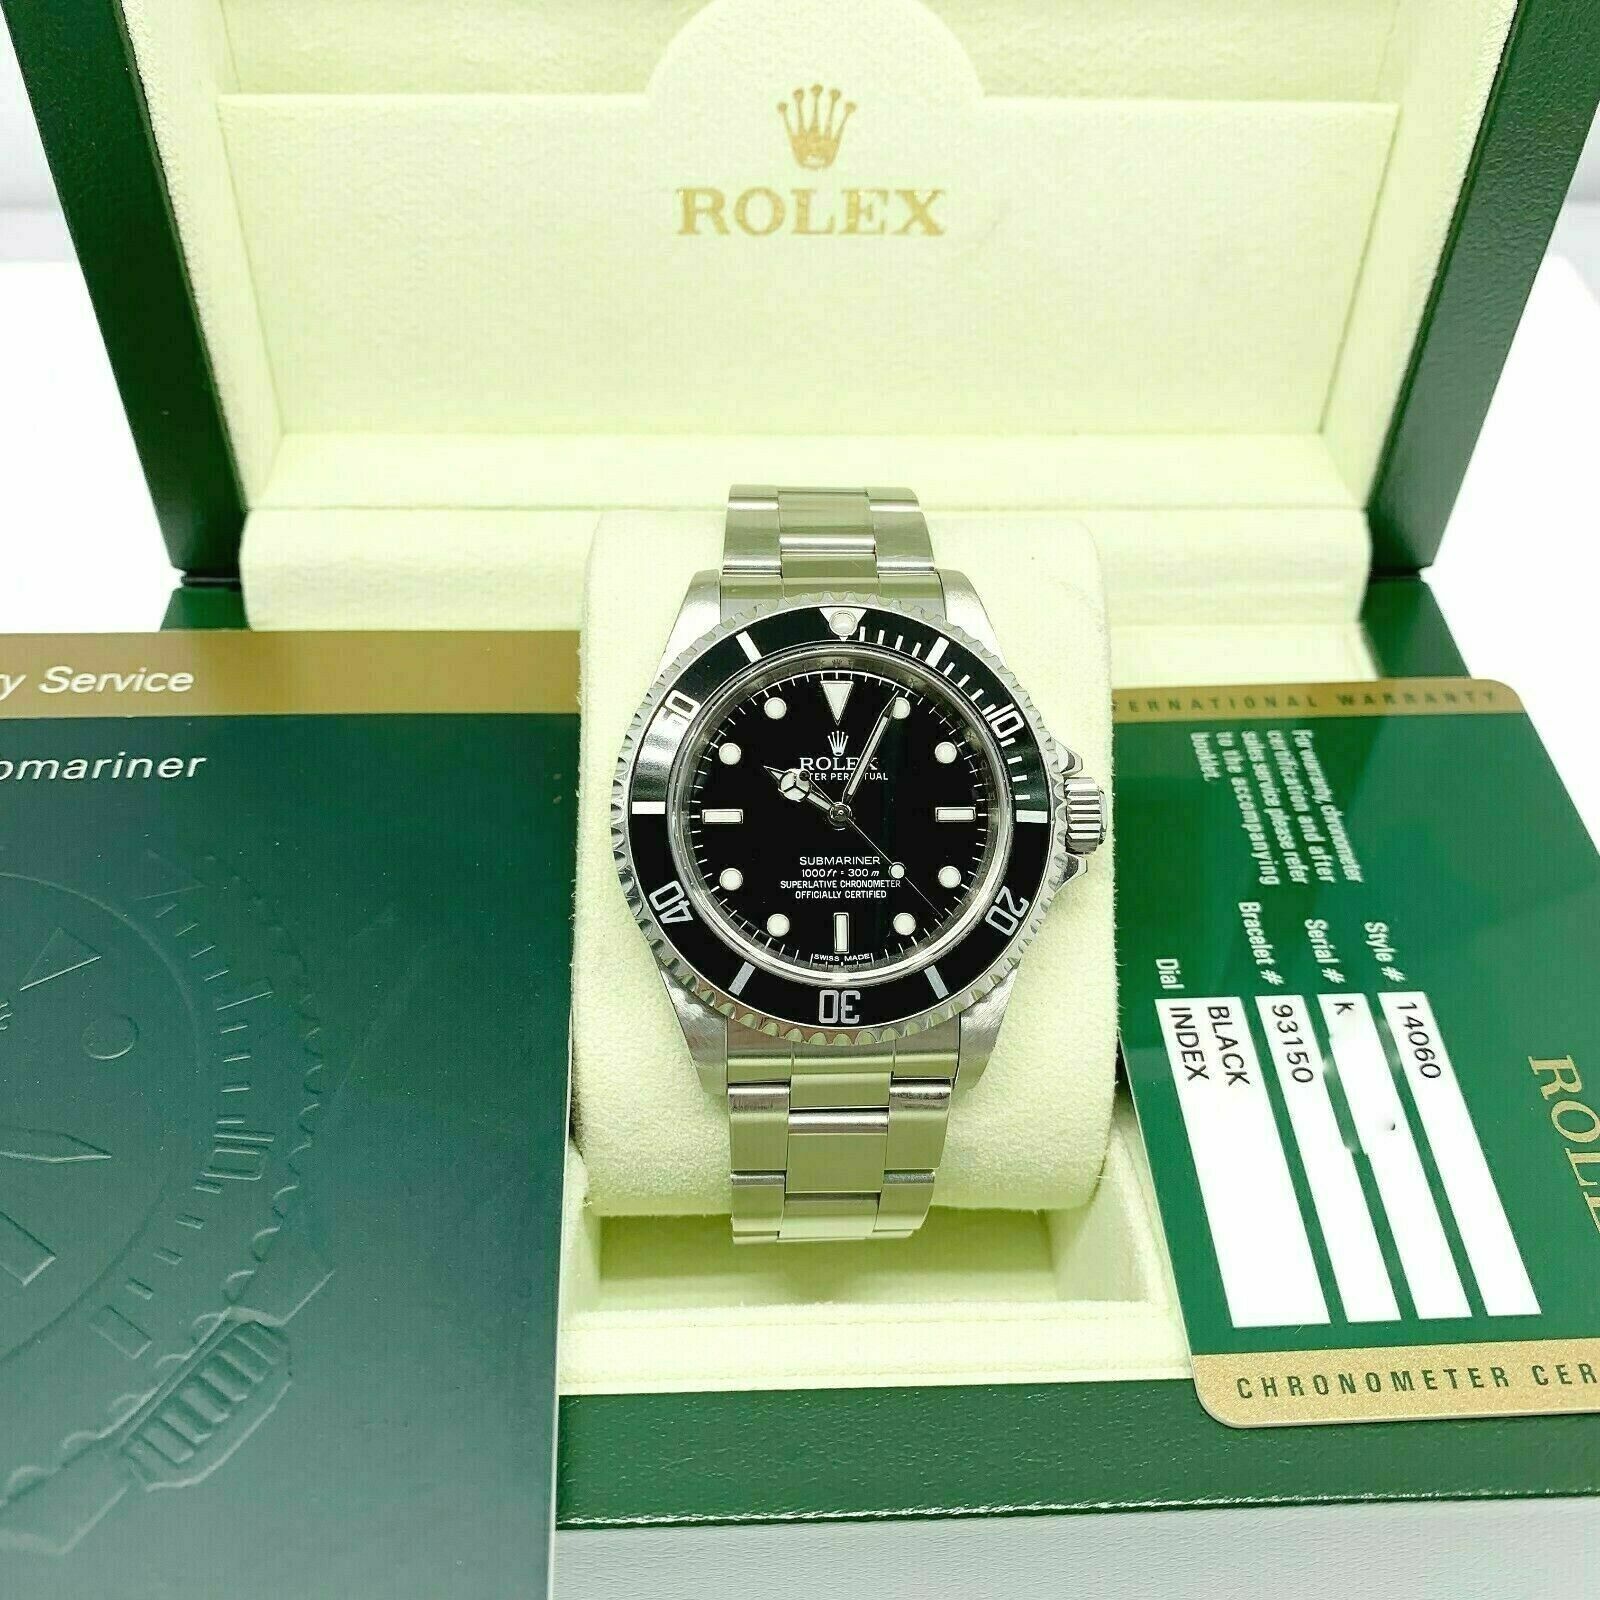 Rolex Black Submariner No Date Stainless Steel Watch Ref 14060 Engraved Box&Card